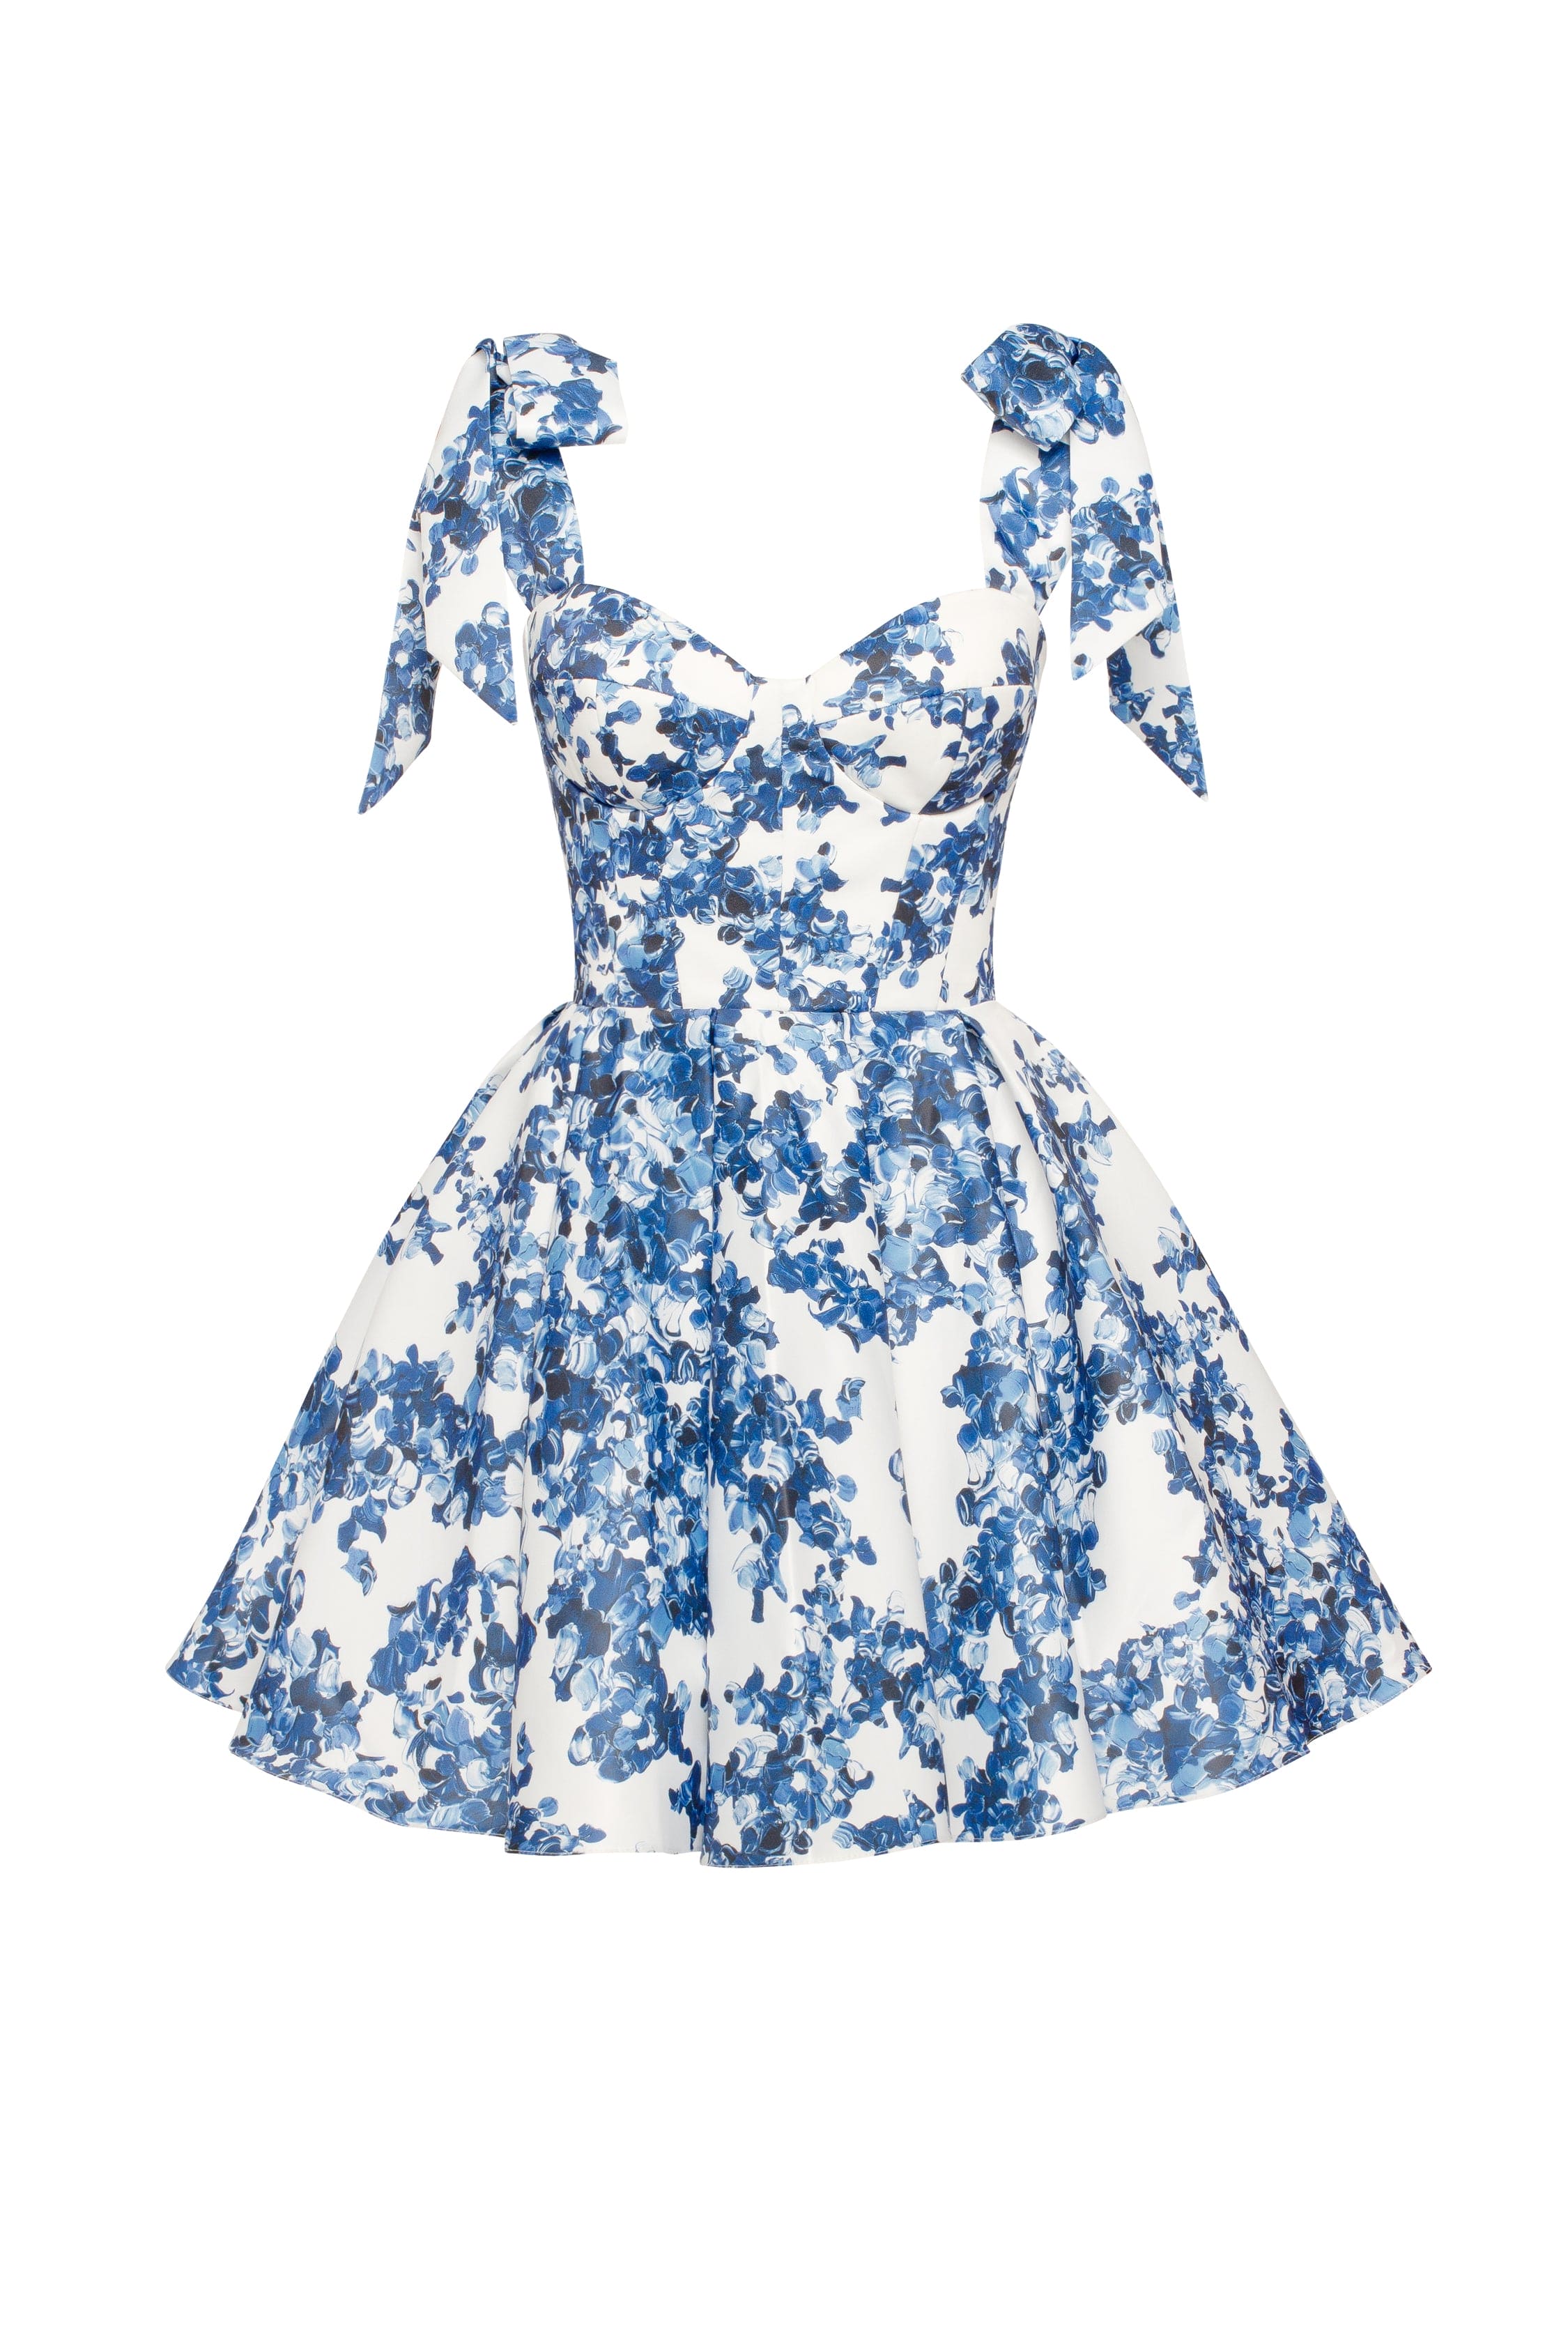 Marvelous blue hydrangea mini dress on straps, Garden of Eden ➤➤ Milla  Dresses - USA, Worldwide delivery